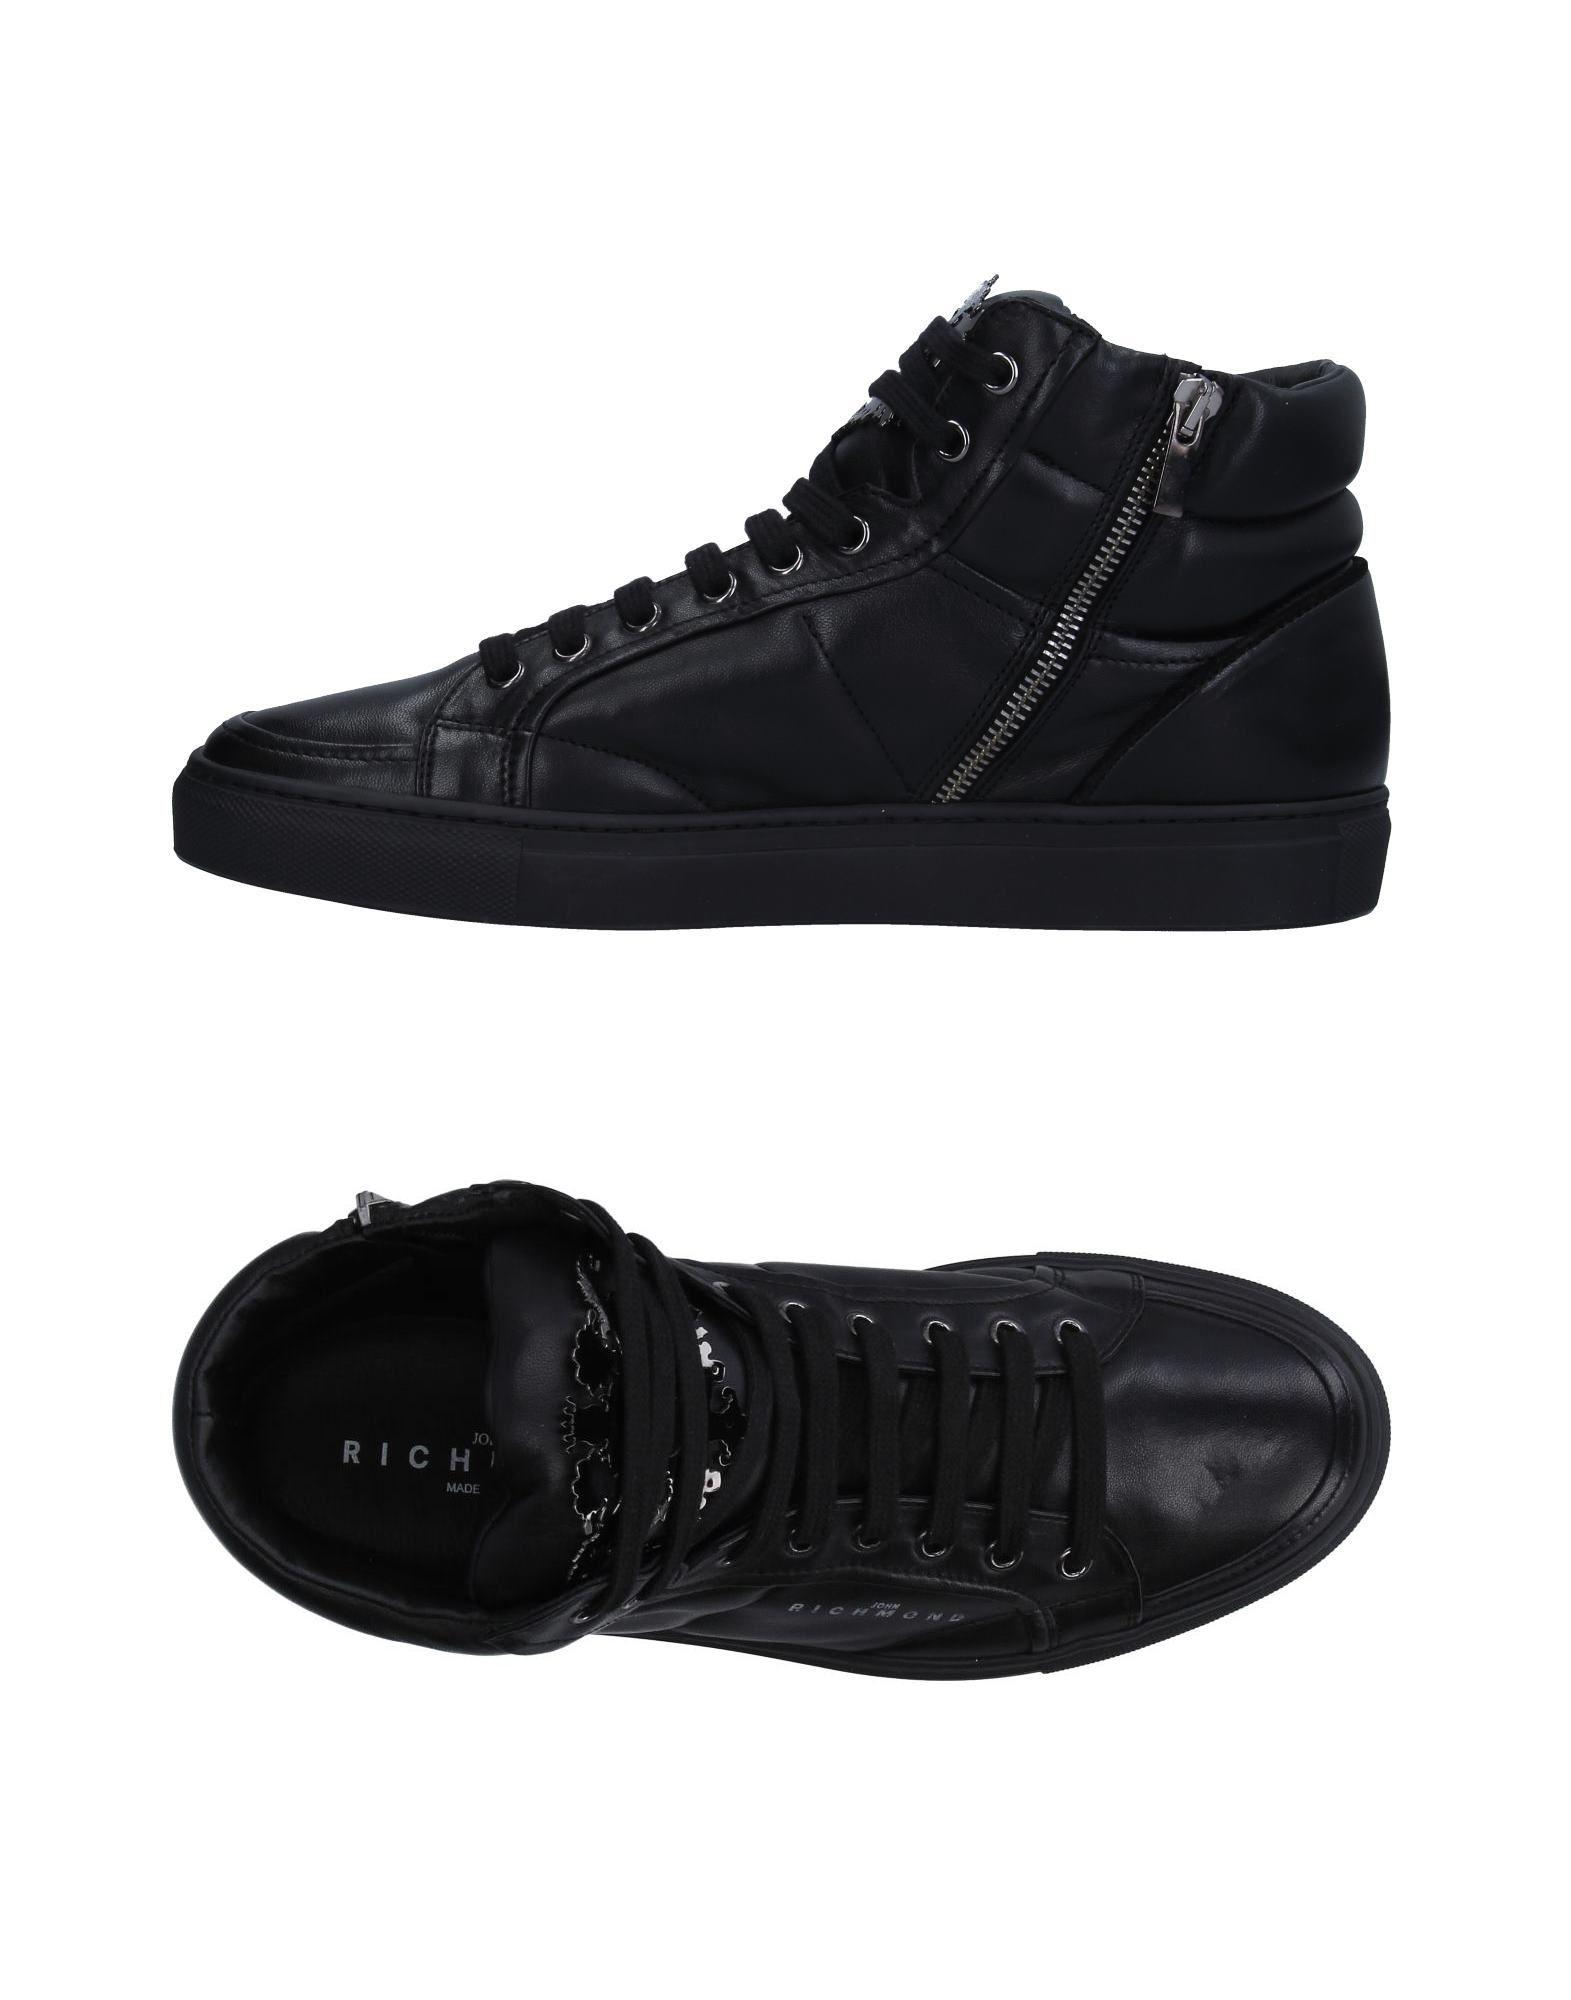 Lyst - John Richmond High-tops & Sneakers in Black for Men